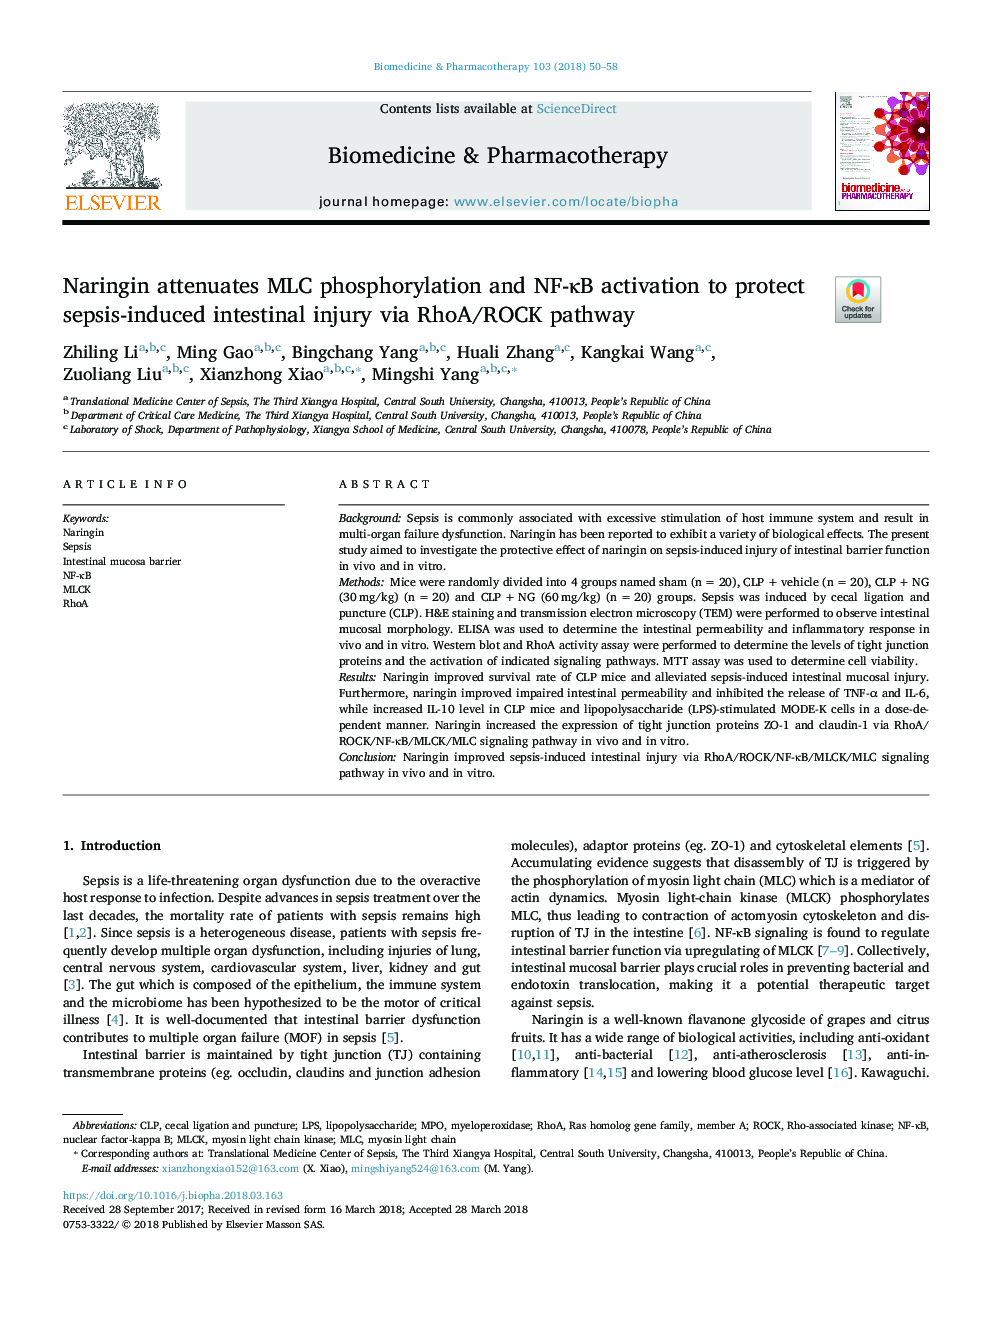 Naringin attenuates MLC phosphorylation and NF-ÎºB activation to protect sepsis-induced intestinal injury via RhoA/ROCK pathway